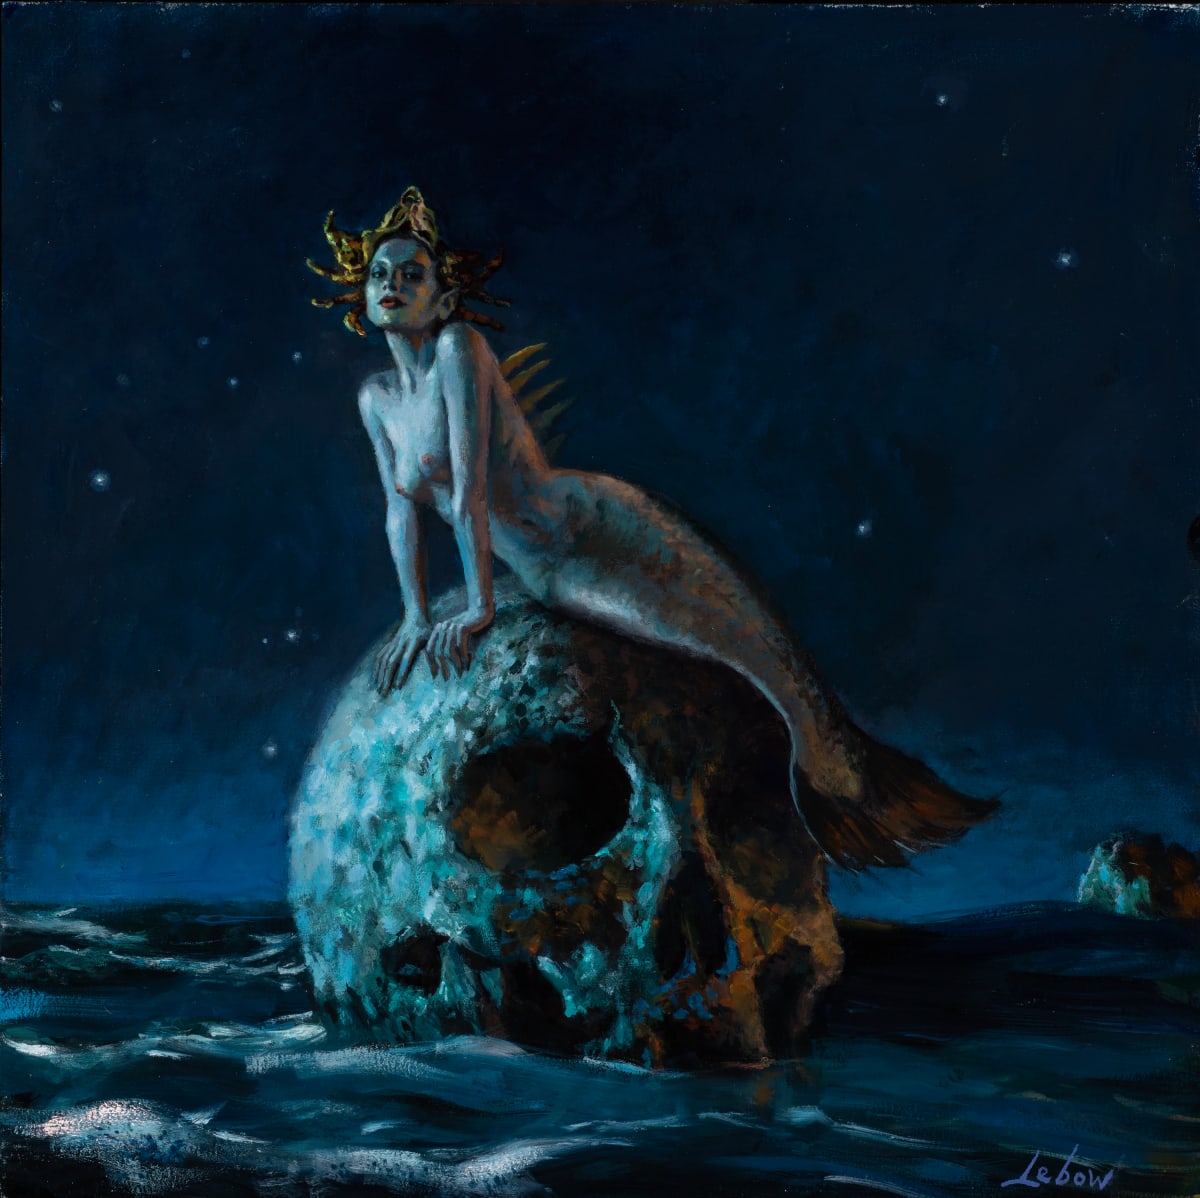 Mermaid by Dave Lebow 